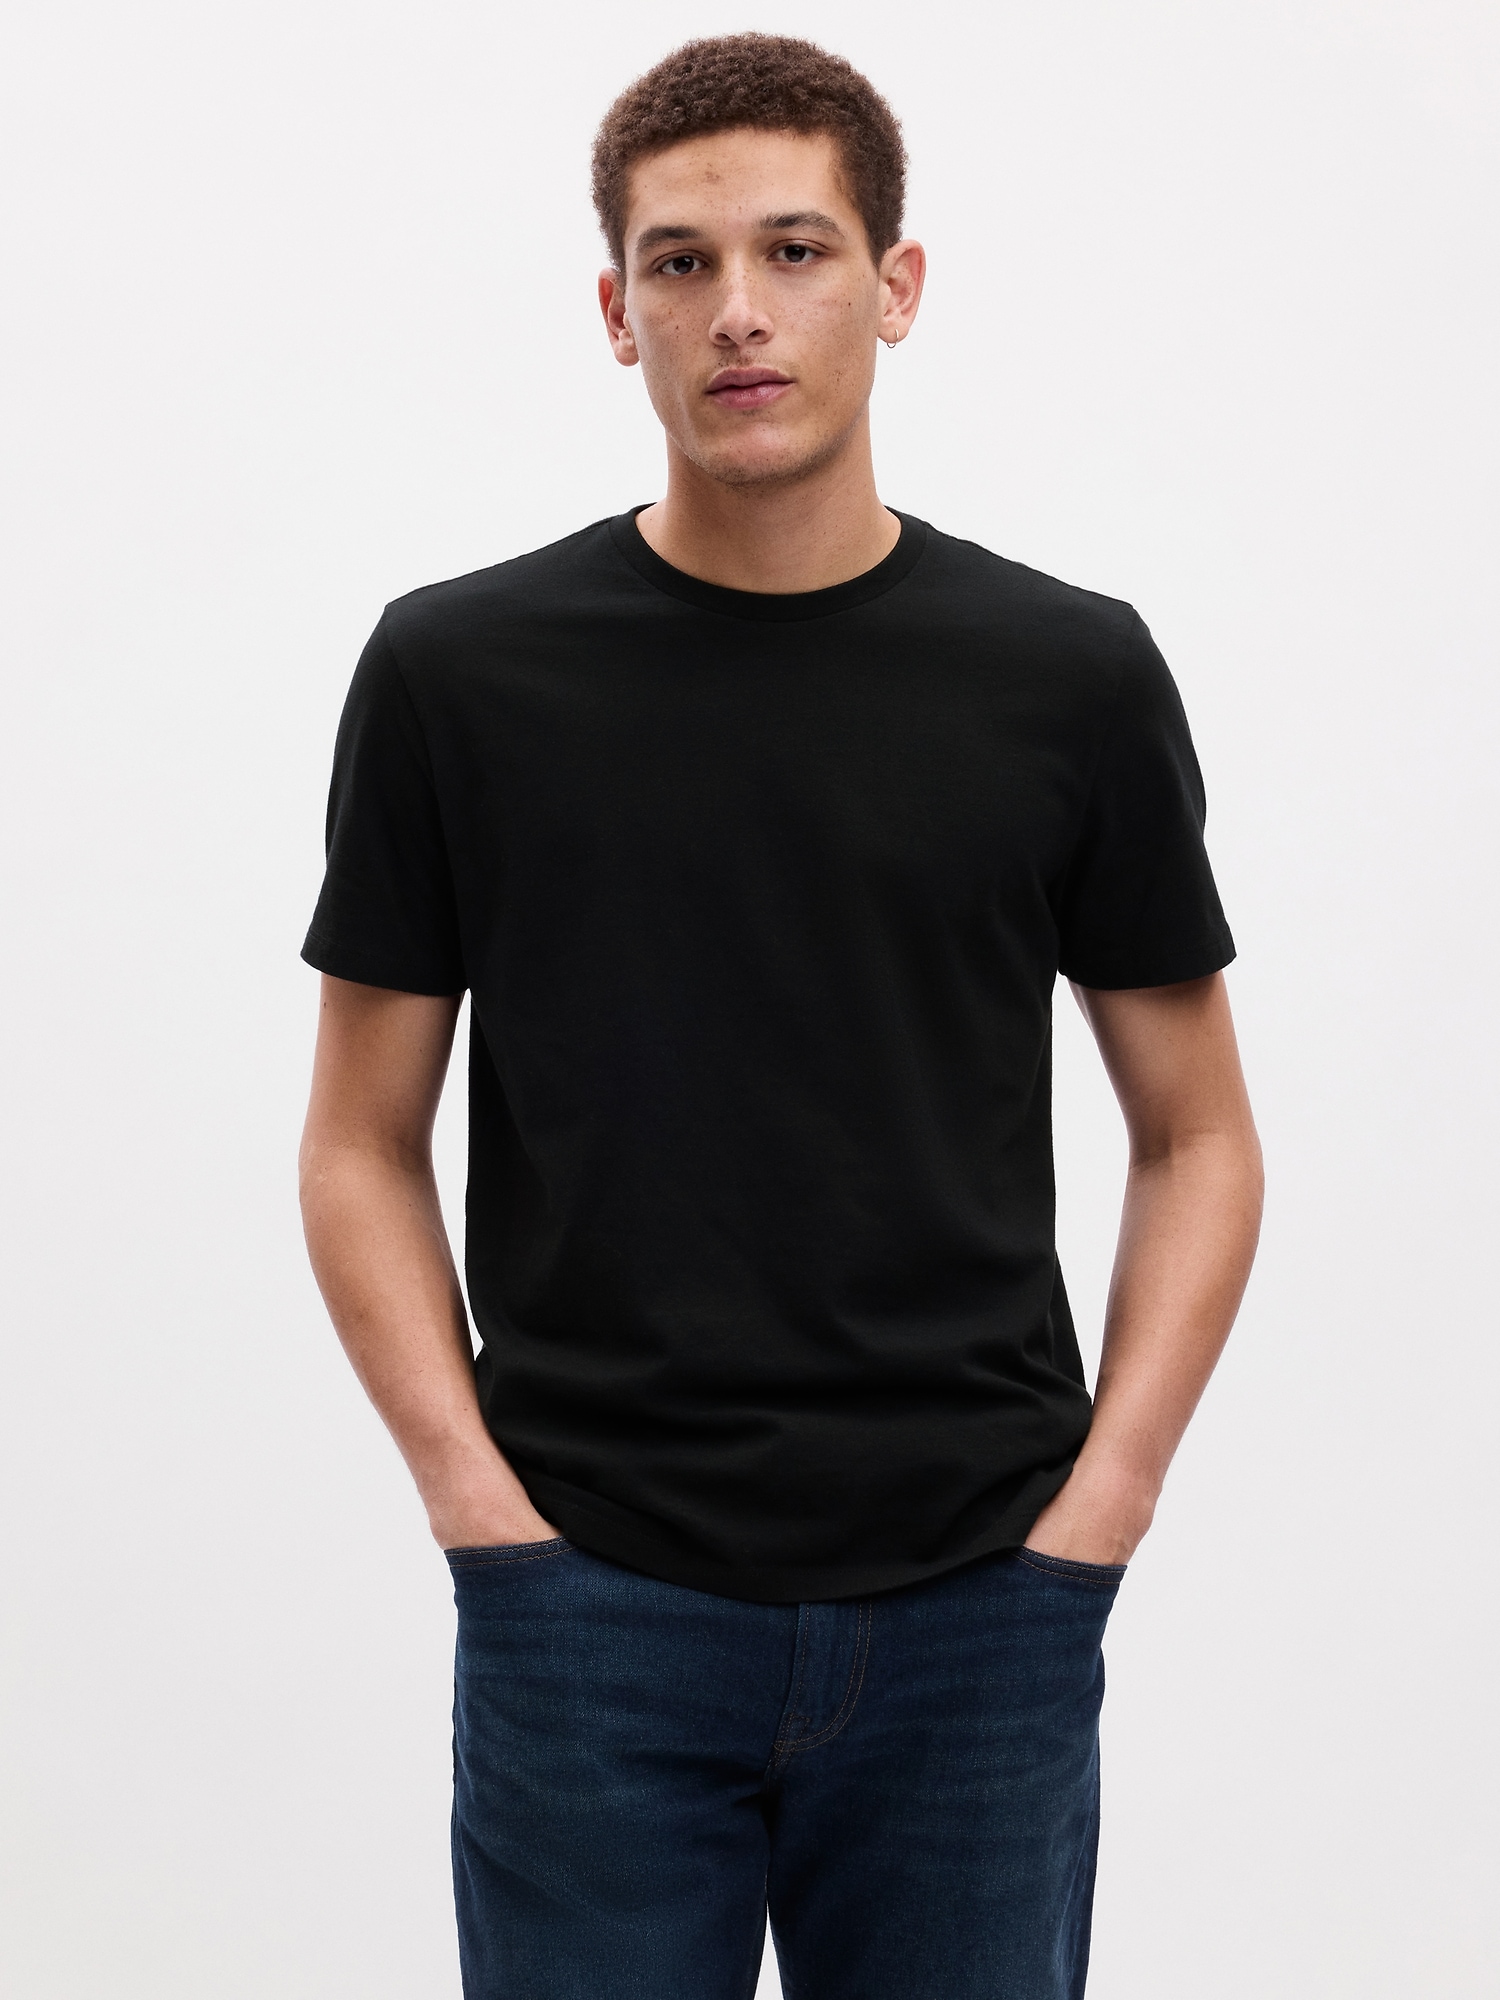 Gap Classic Cotton T-Shirt